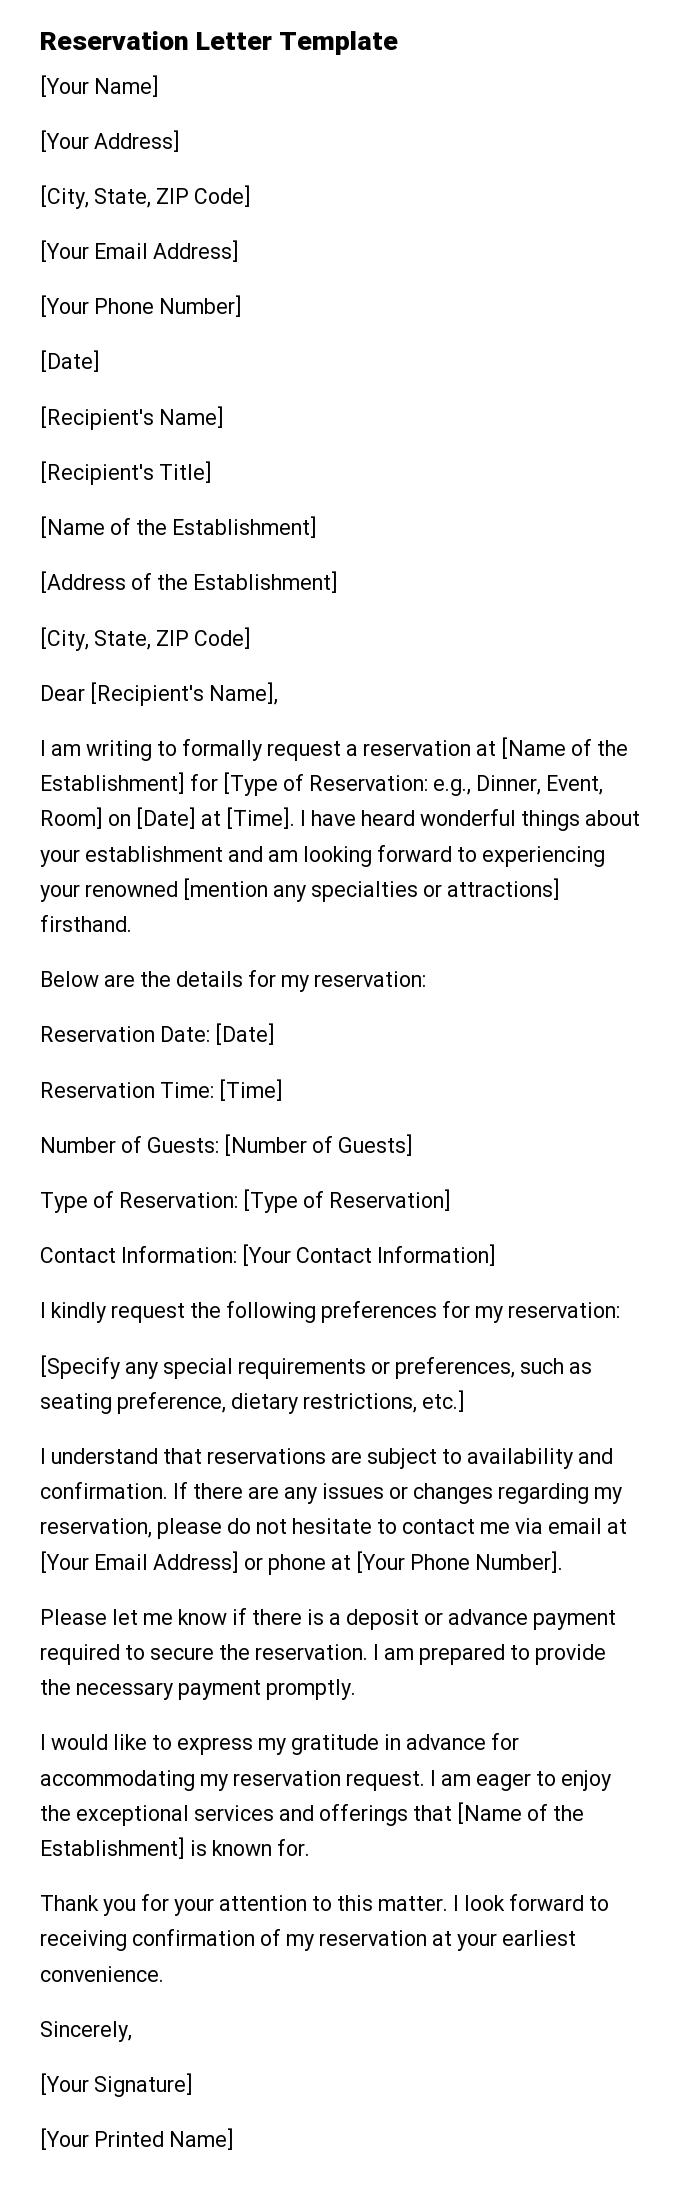 Reservation Letter Template